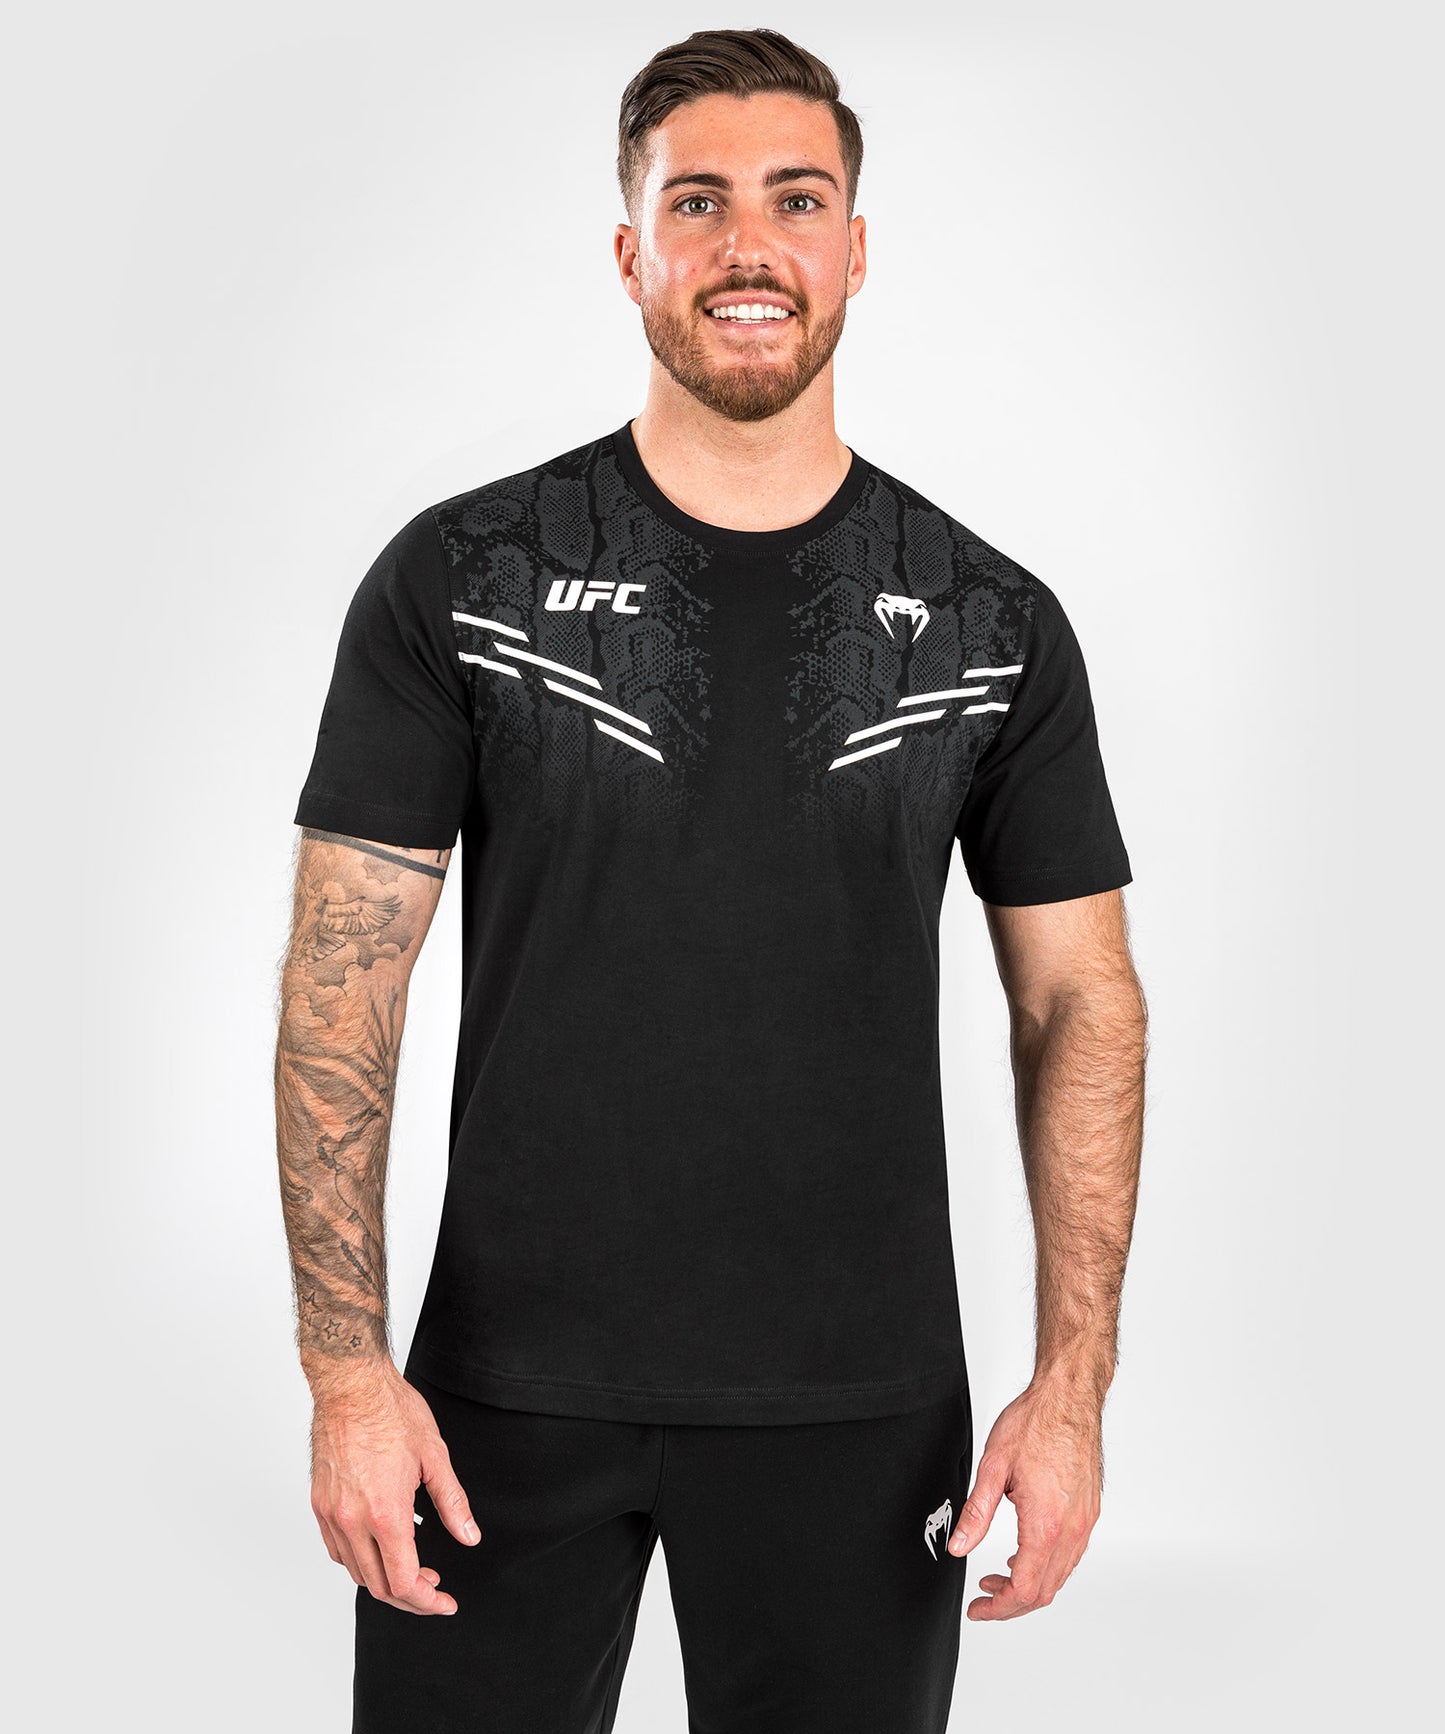 UFC Adrenaline by Venum Replica  Men’s Short-sleeve T-shirt - Black